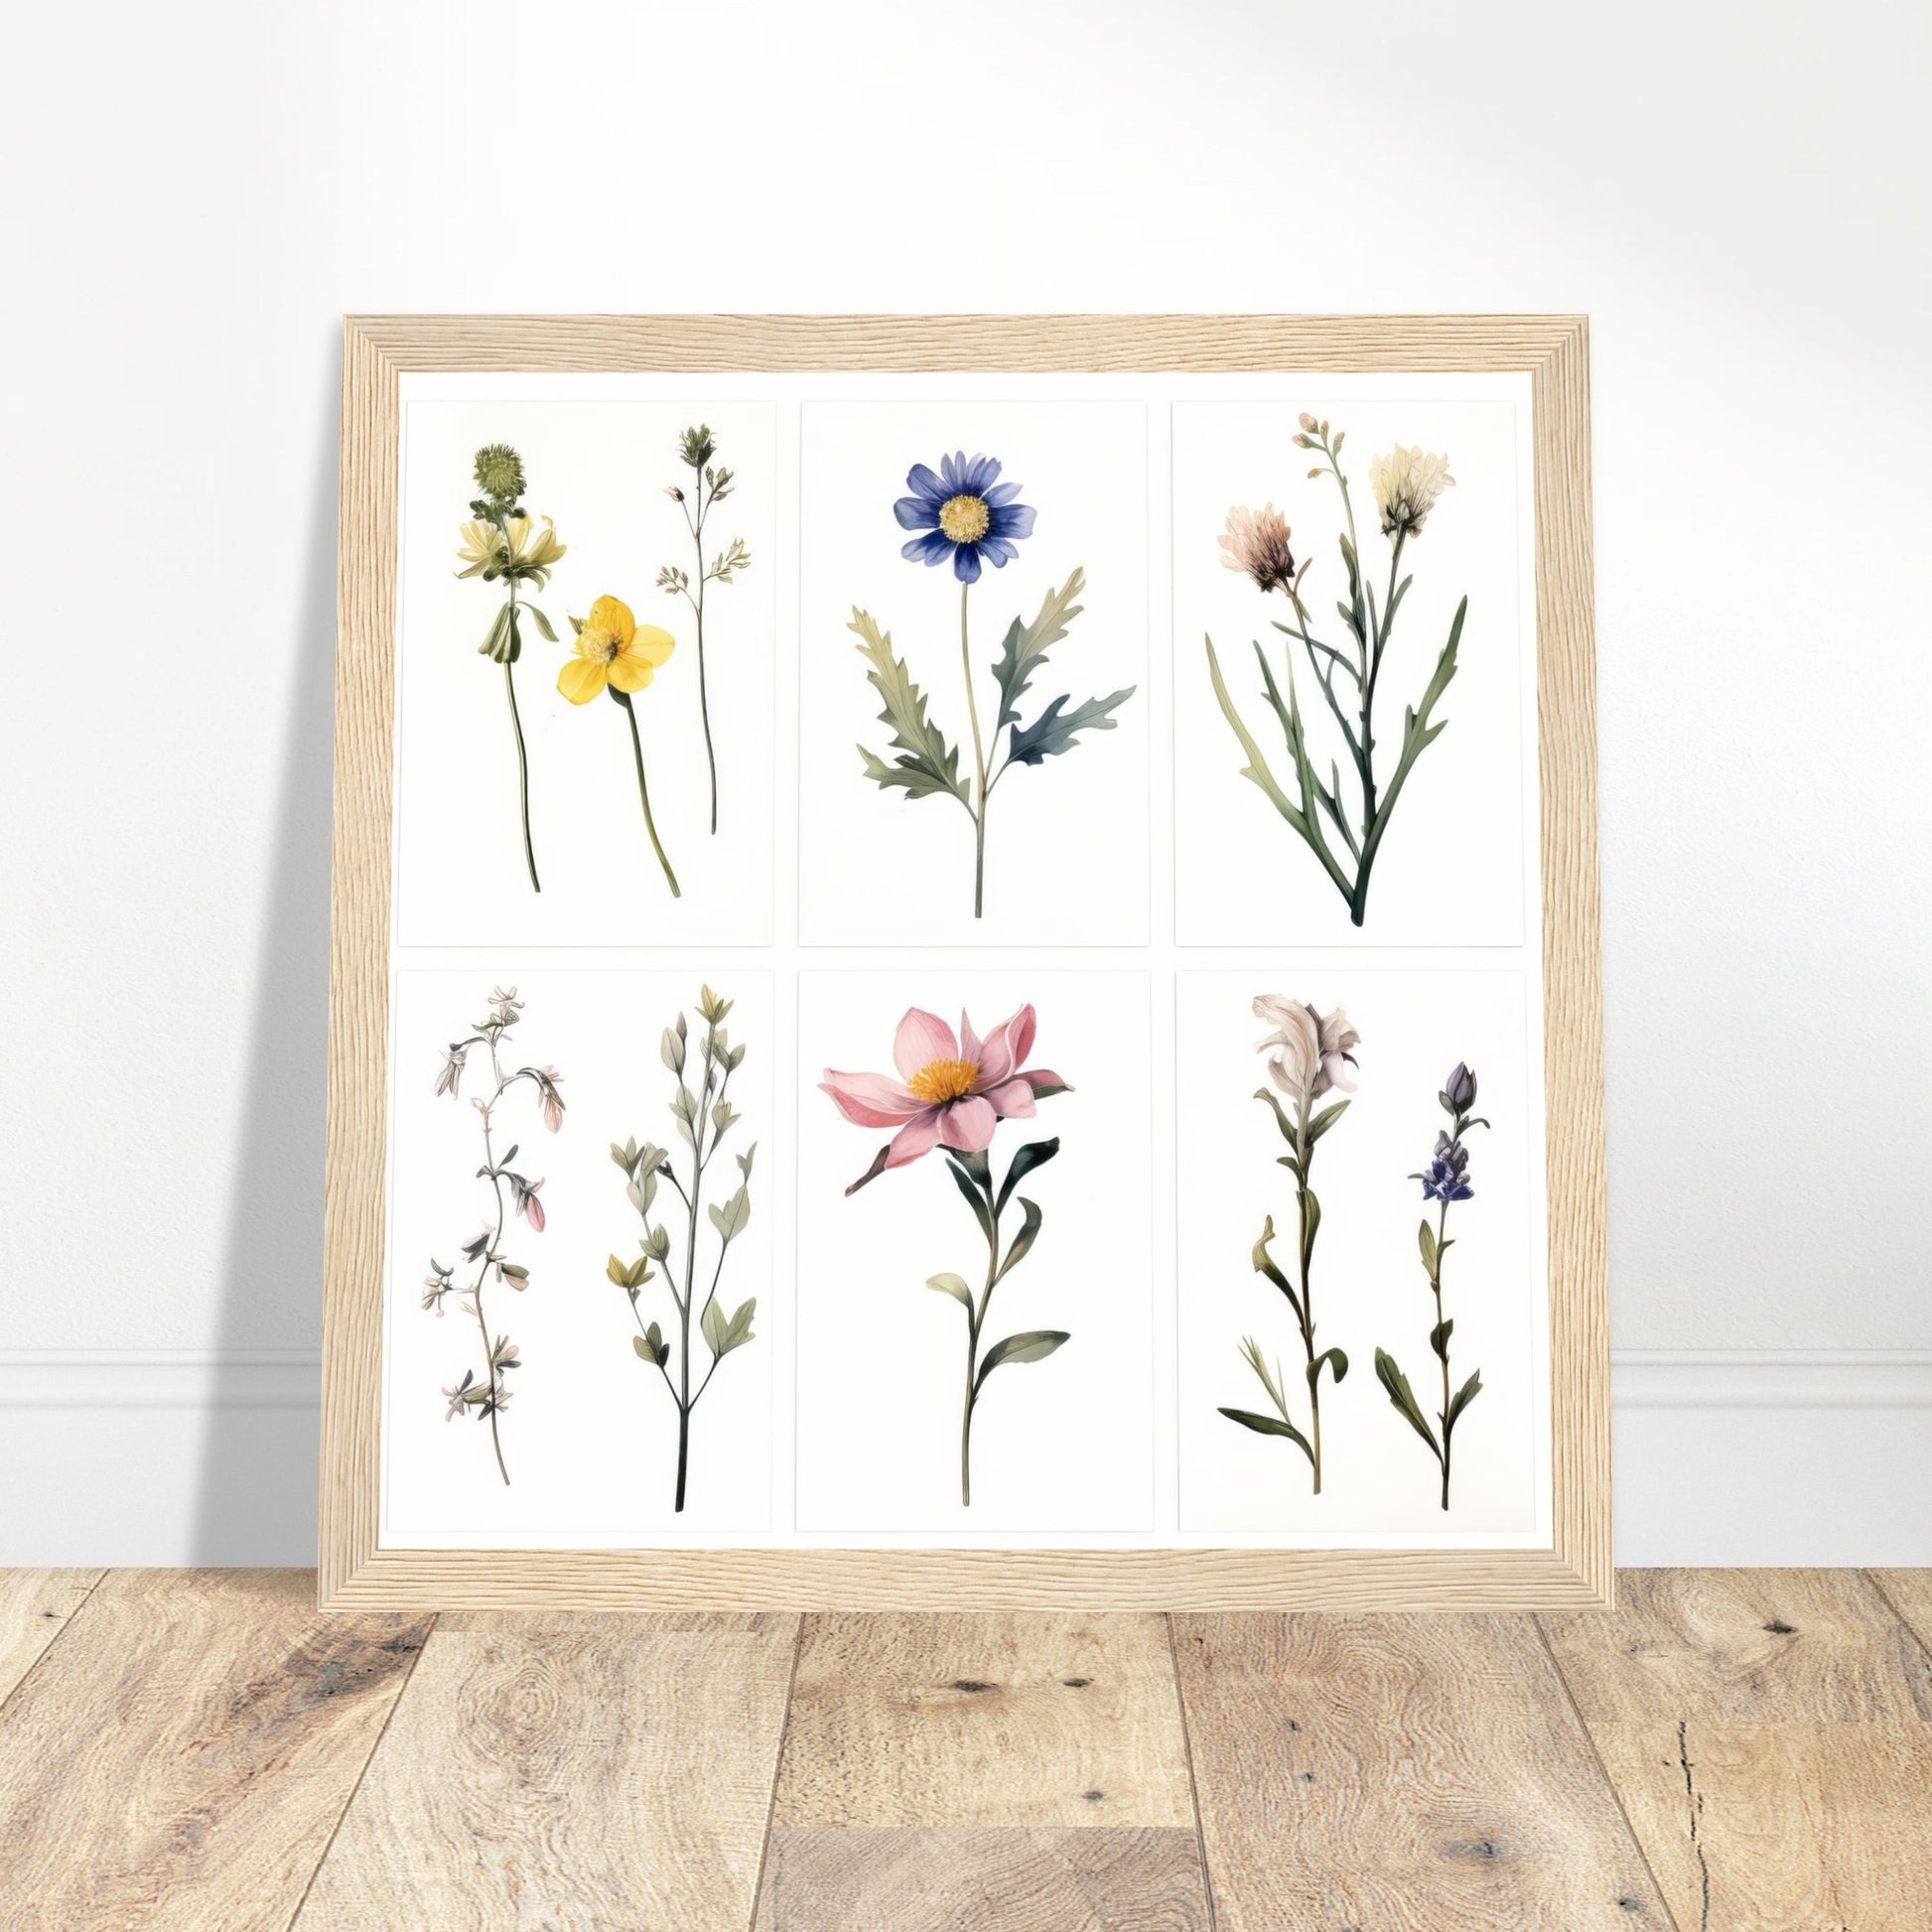 Elegance - Botanical Artwork #4- Print Room Ltd Wood frame 50x50 cm / 20x20"